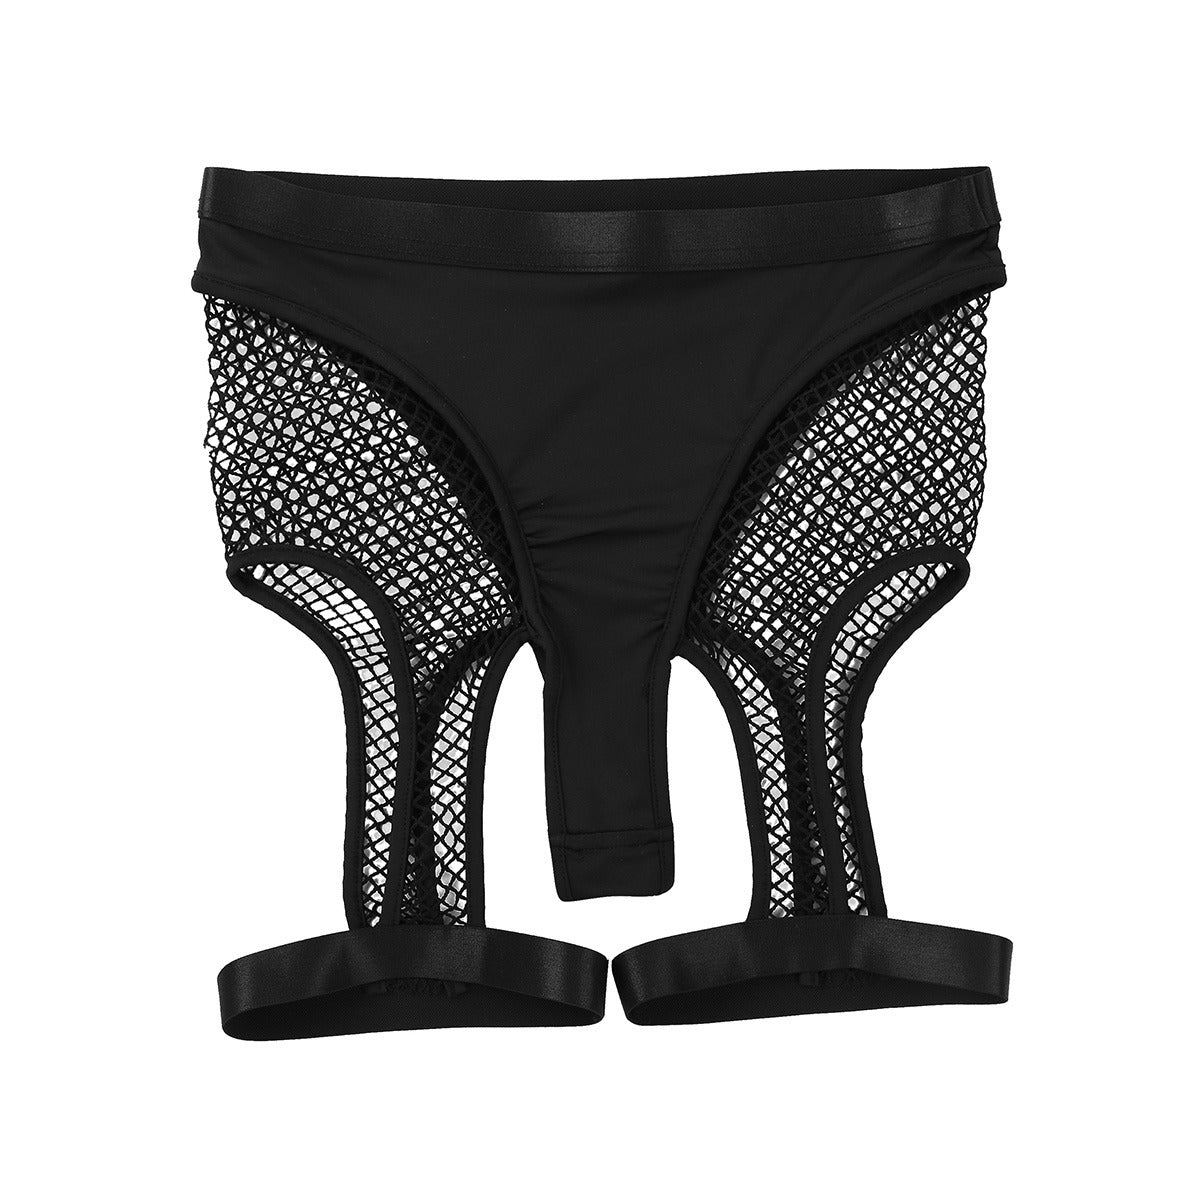 High-Waisted Women's Sexy Underwear / See Through Fishnet Panties